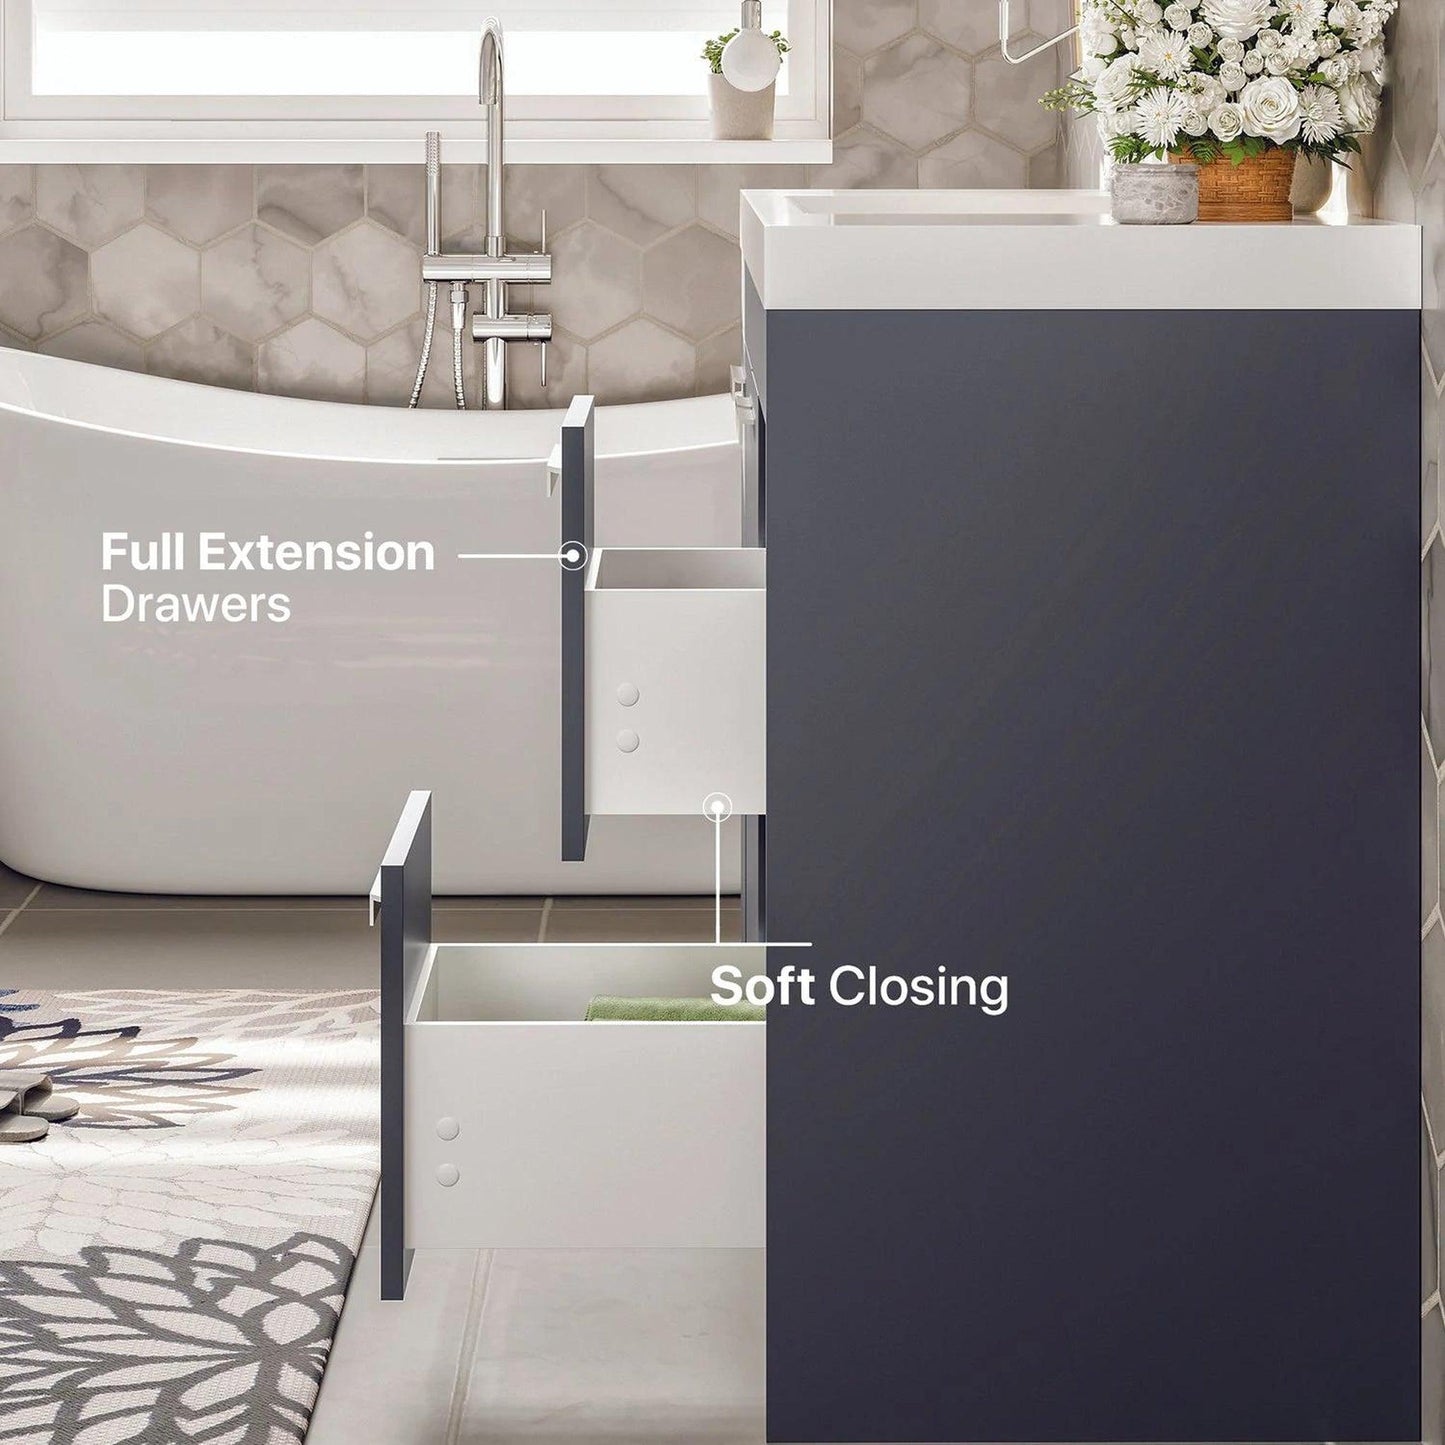 Eviva Lugano 42” x 36” Gray Bathroom Vanity With White Single Integrated Acrylic Top